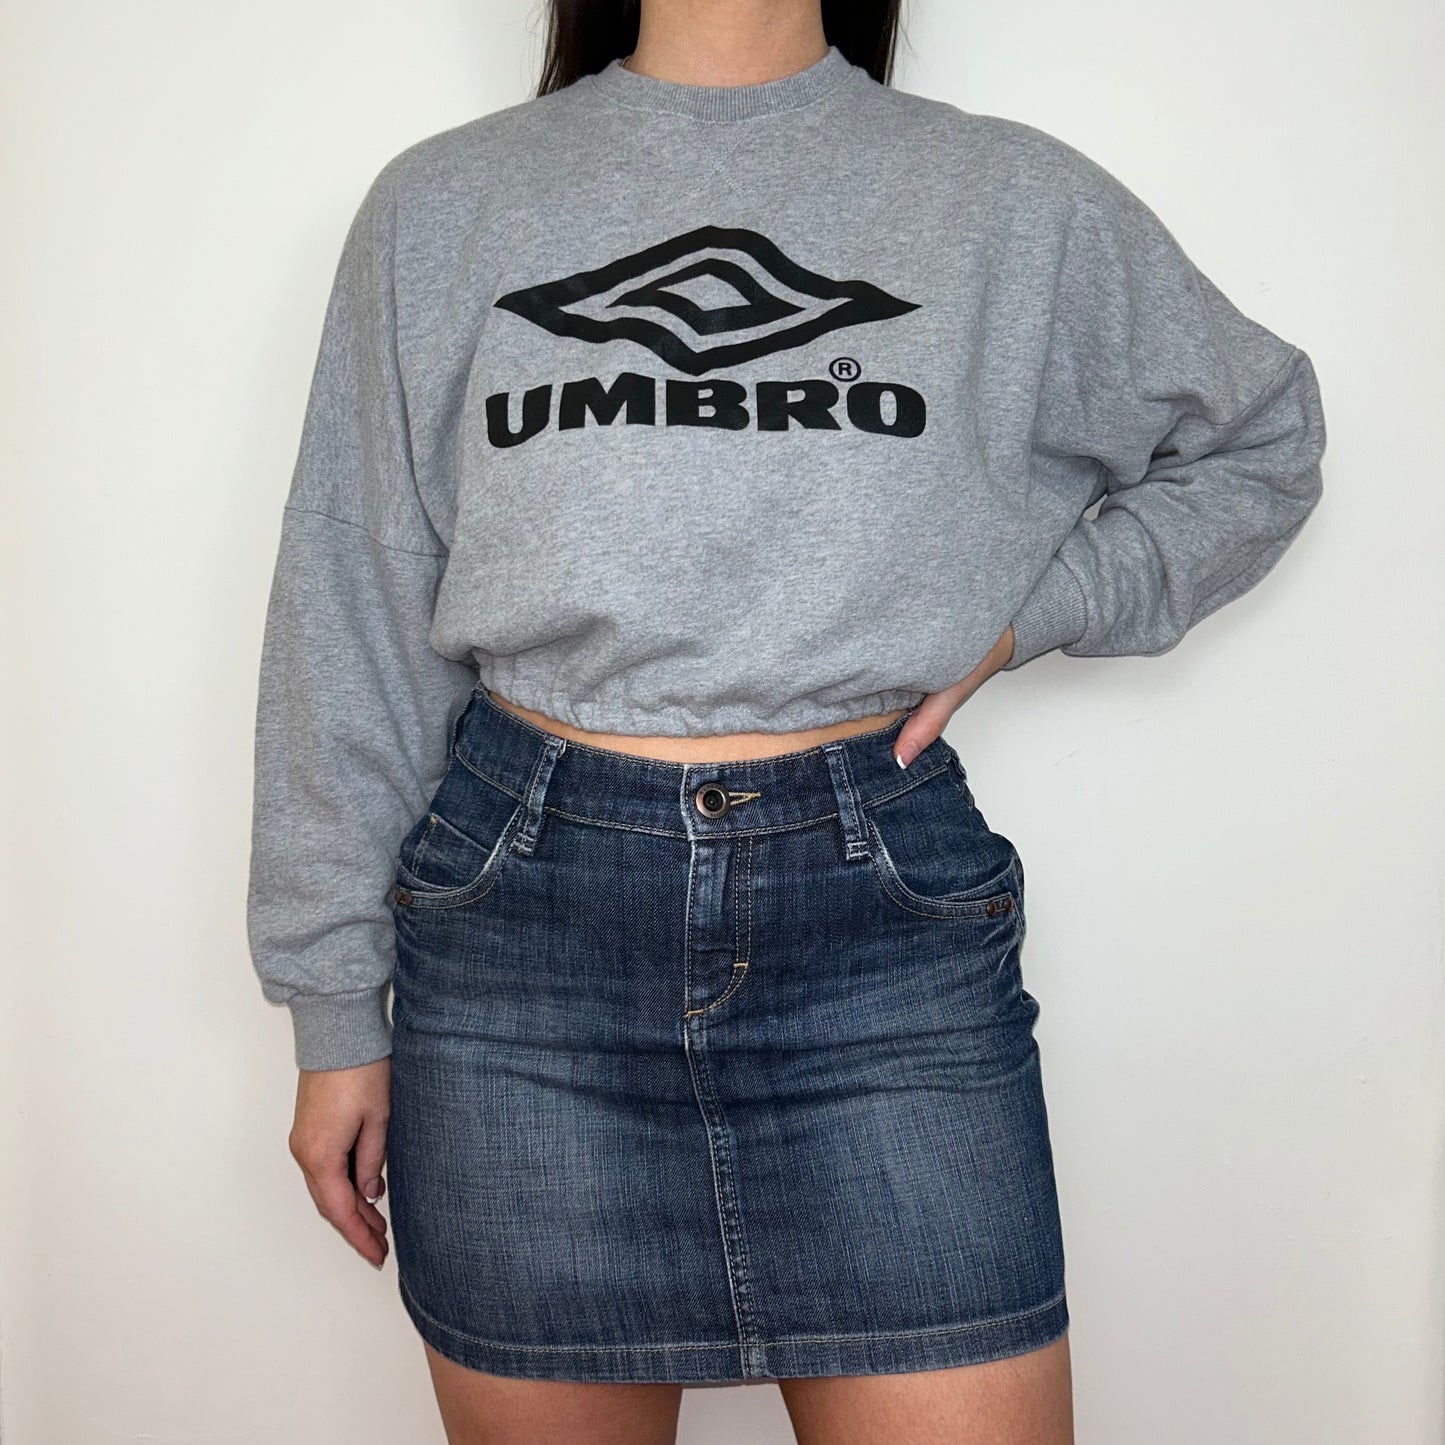 light grey cropped sweatshirt with black umbro logo shown on a model wearing a blue denim mini skirt